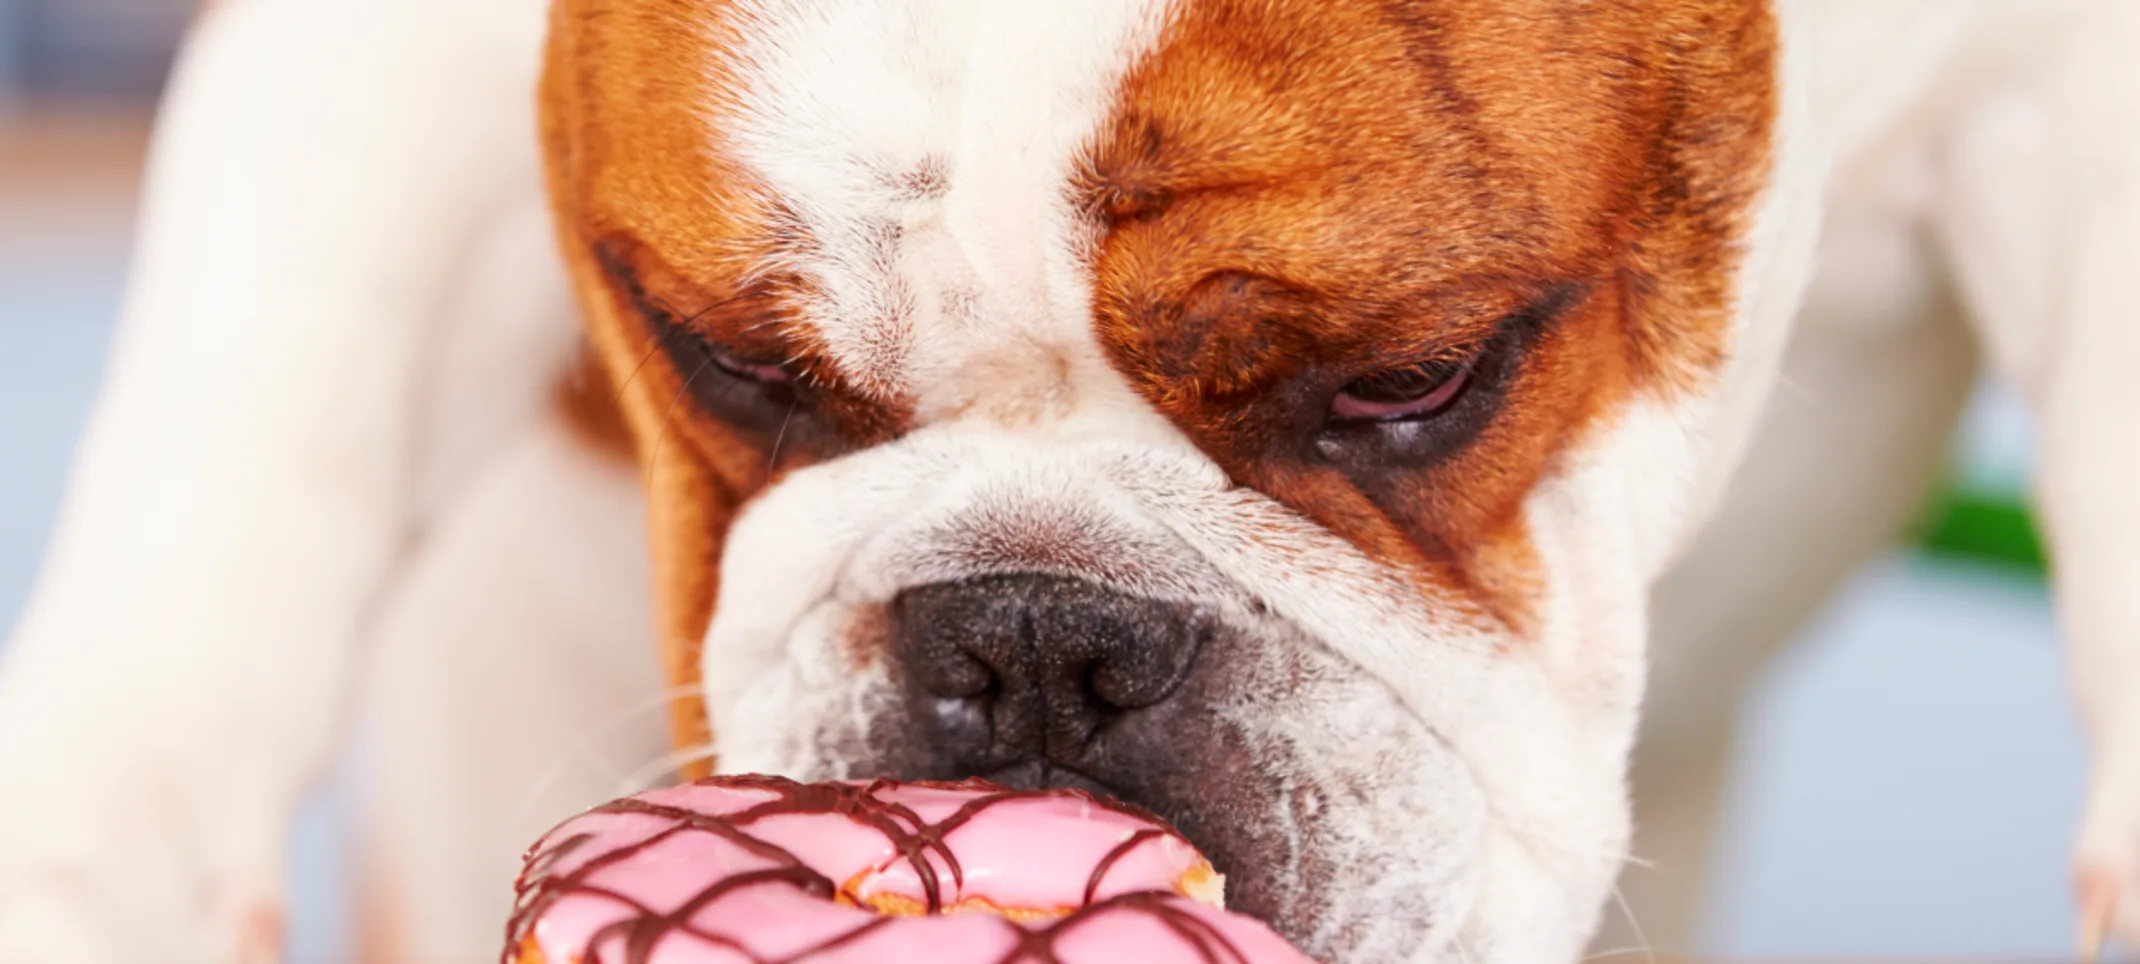 Dog eating donut